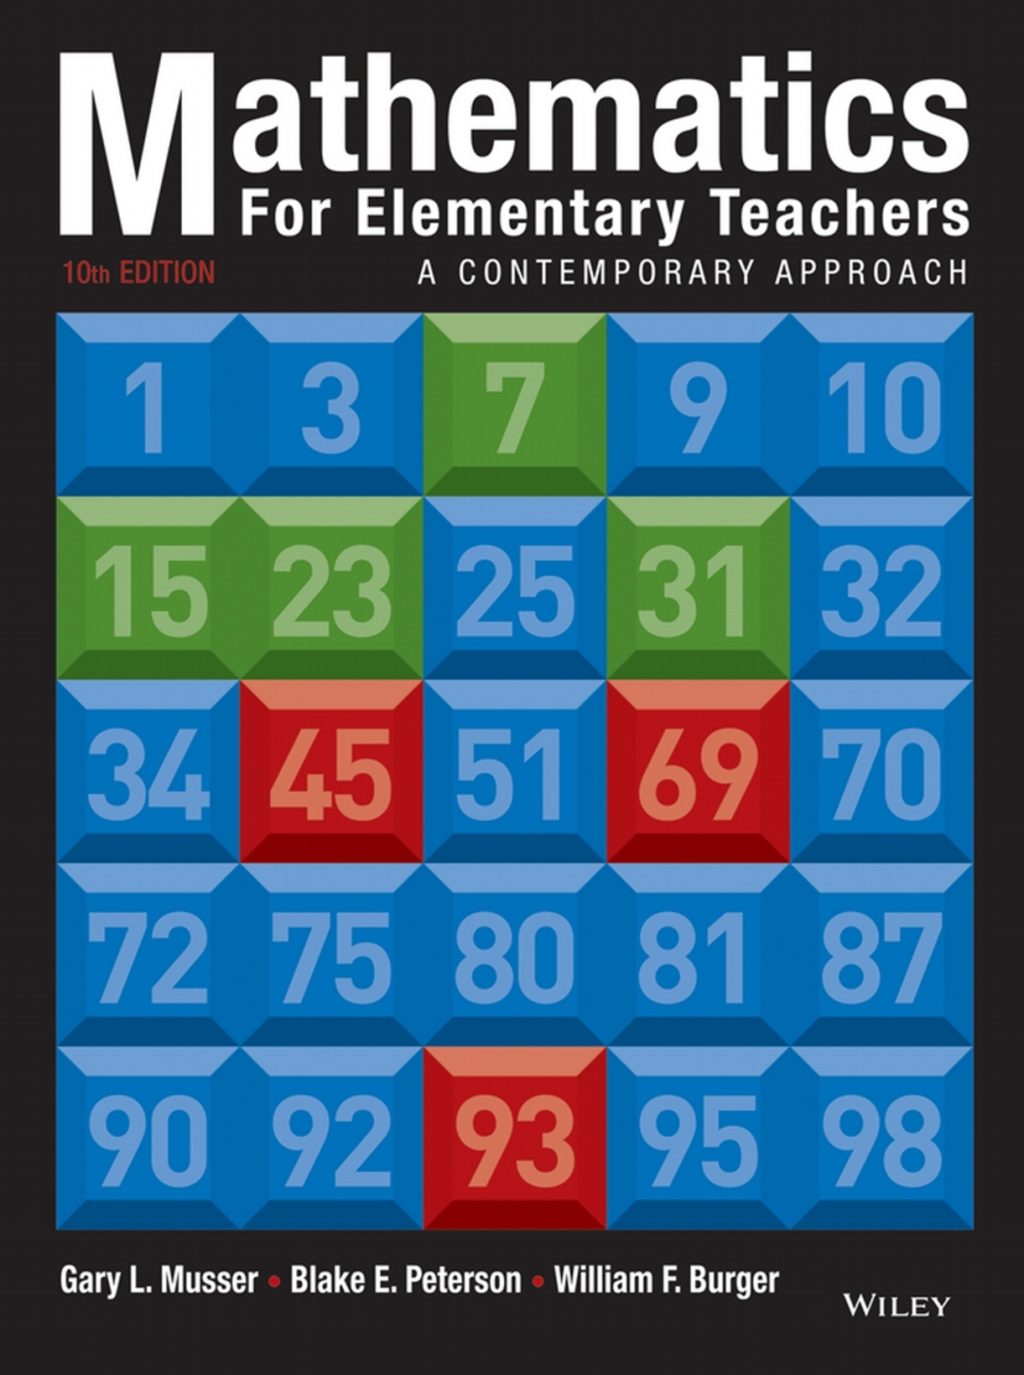 Mathematics for Elementary Teachers: A Contemporary Approach - 10th Edition (eBook Rental)